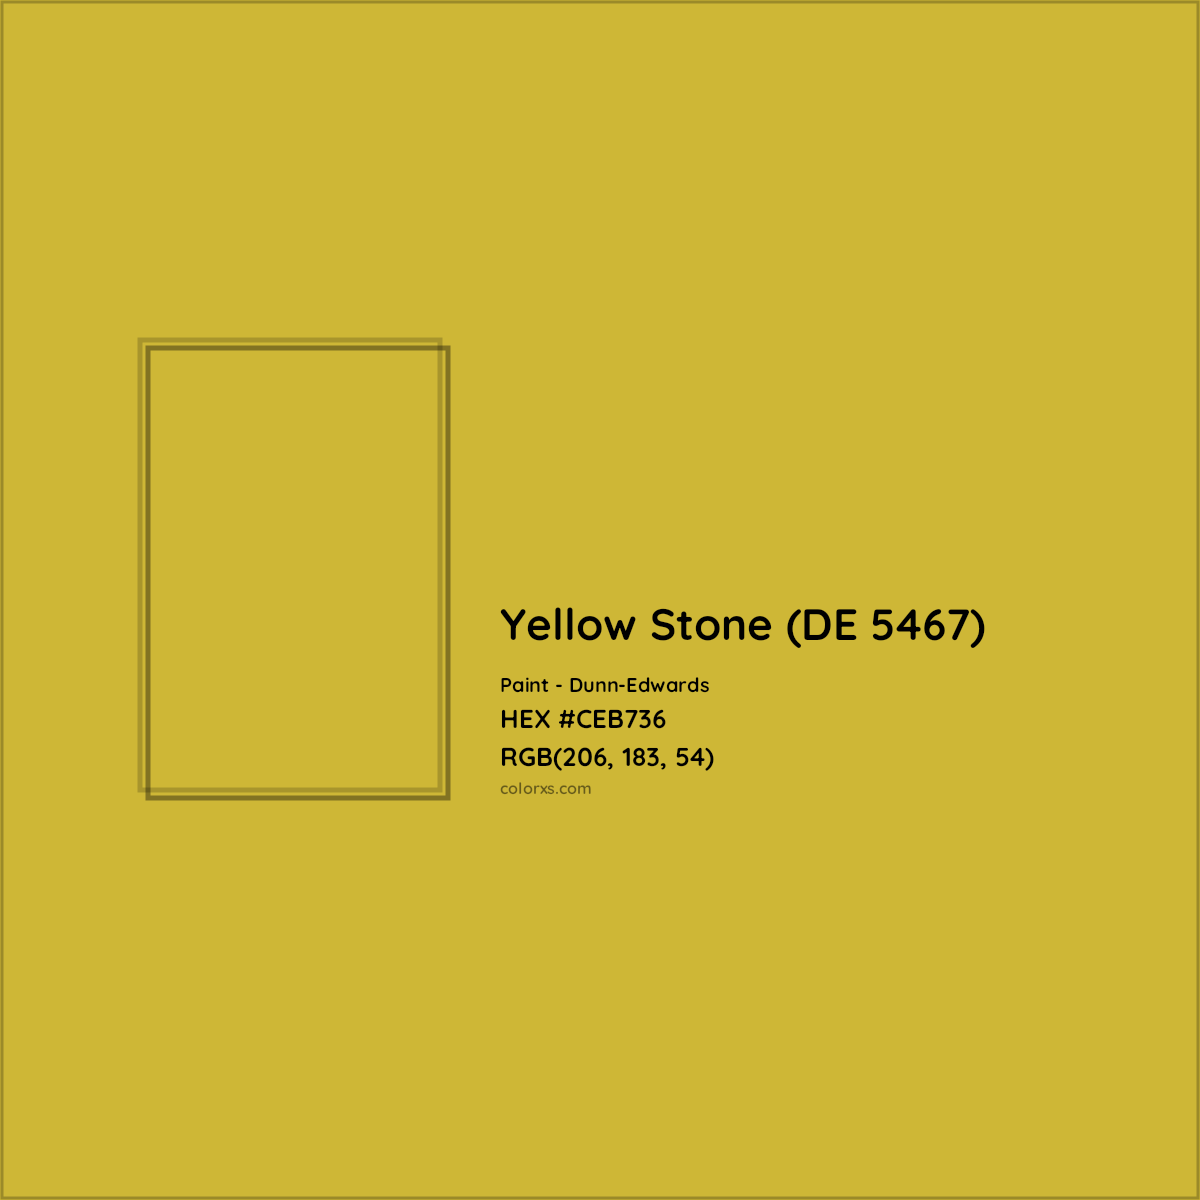 HEX #CEB736 Yellow Stone (DE 5467) Paint Dunn-Edwards - Color Code